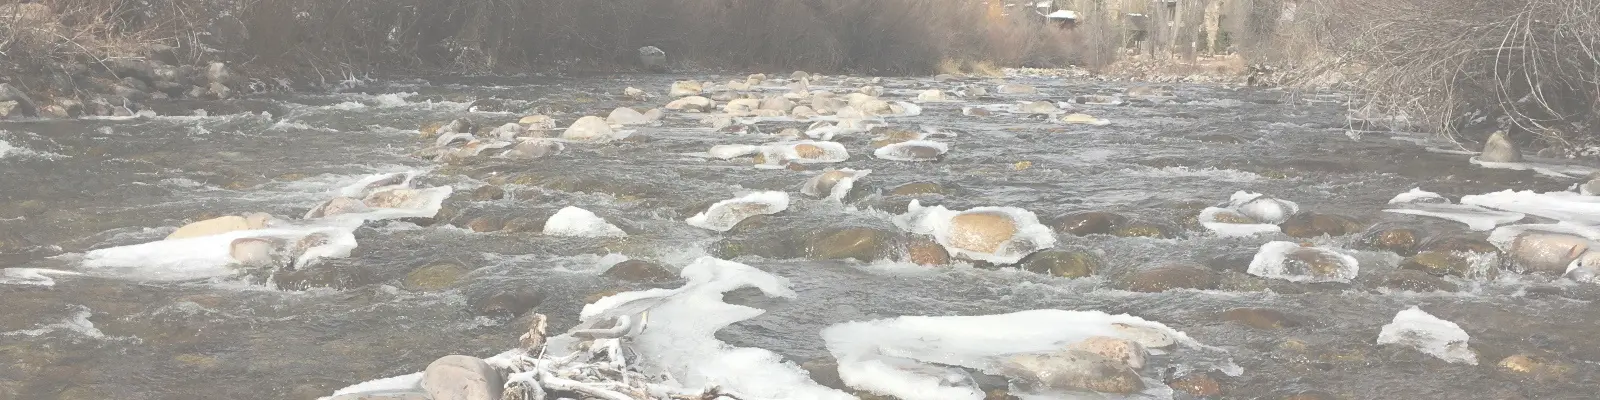 Image showing river flowing over rocks.